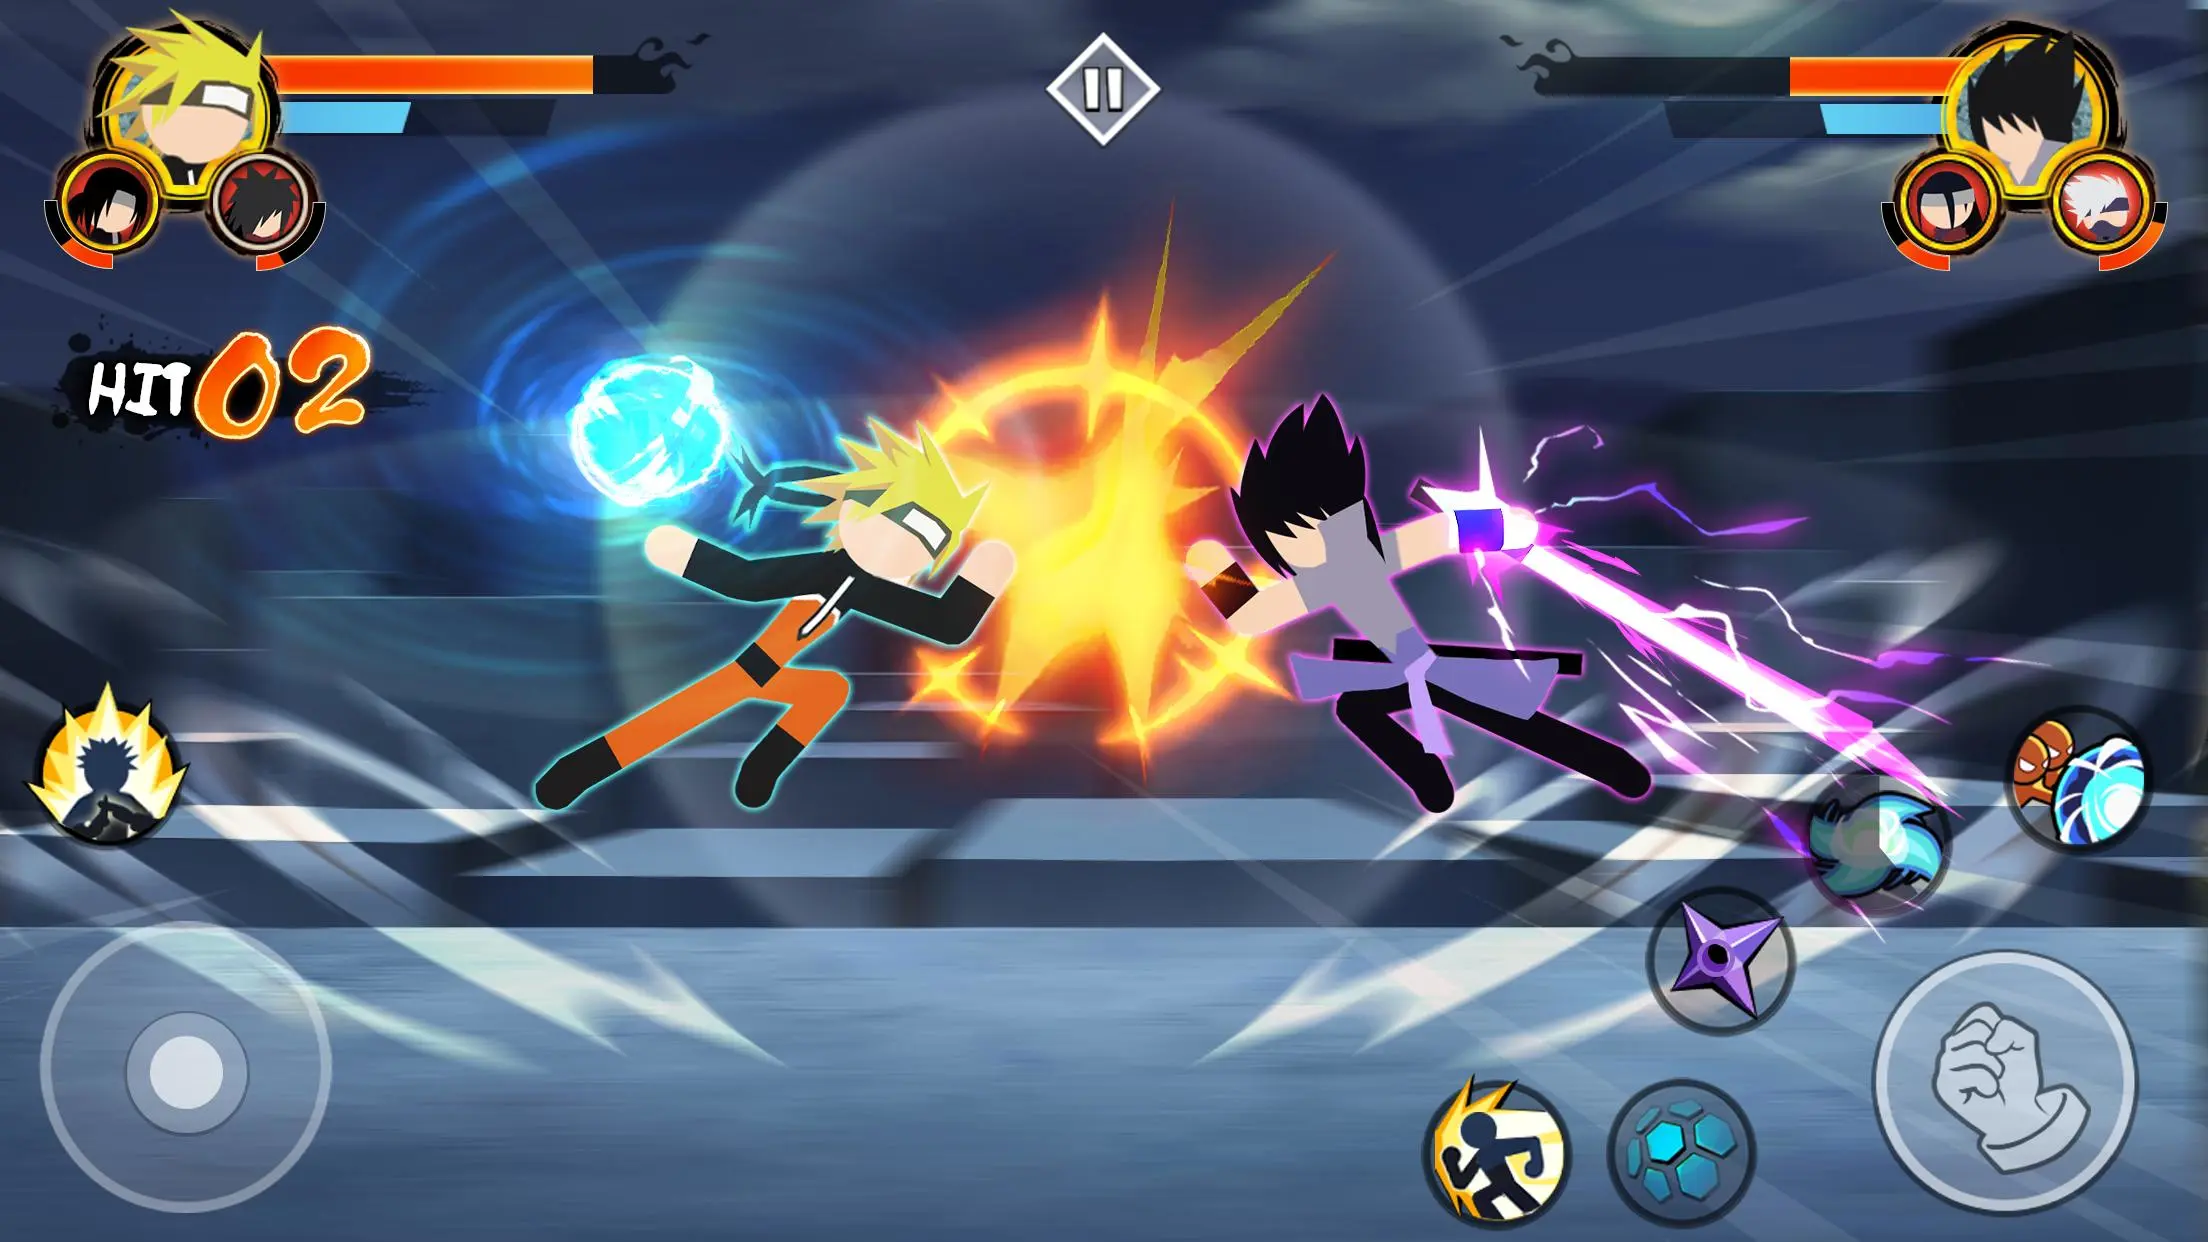 Download Stickman Ninja - 3v3 Battle android on PC